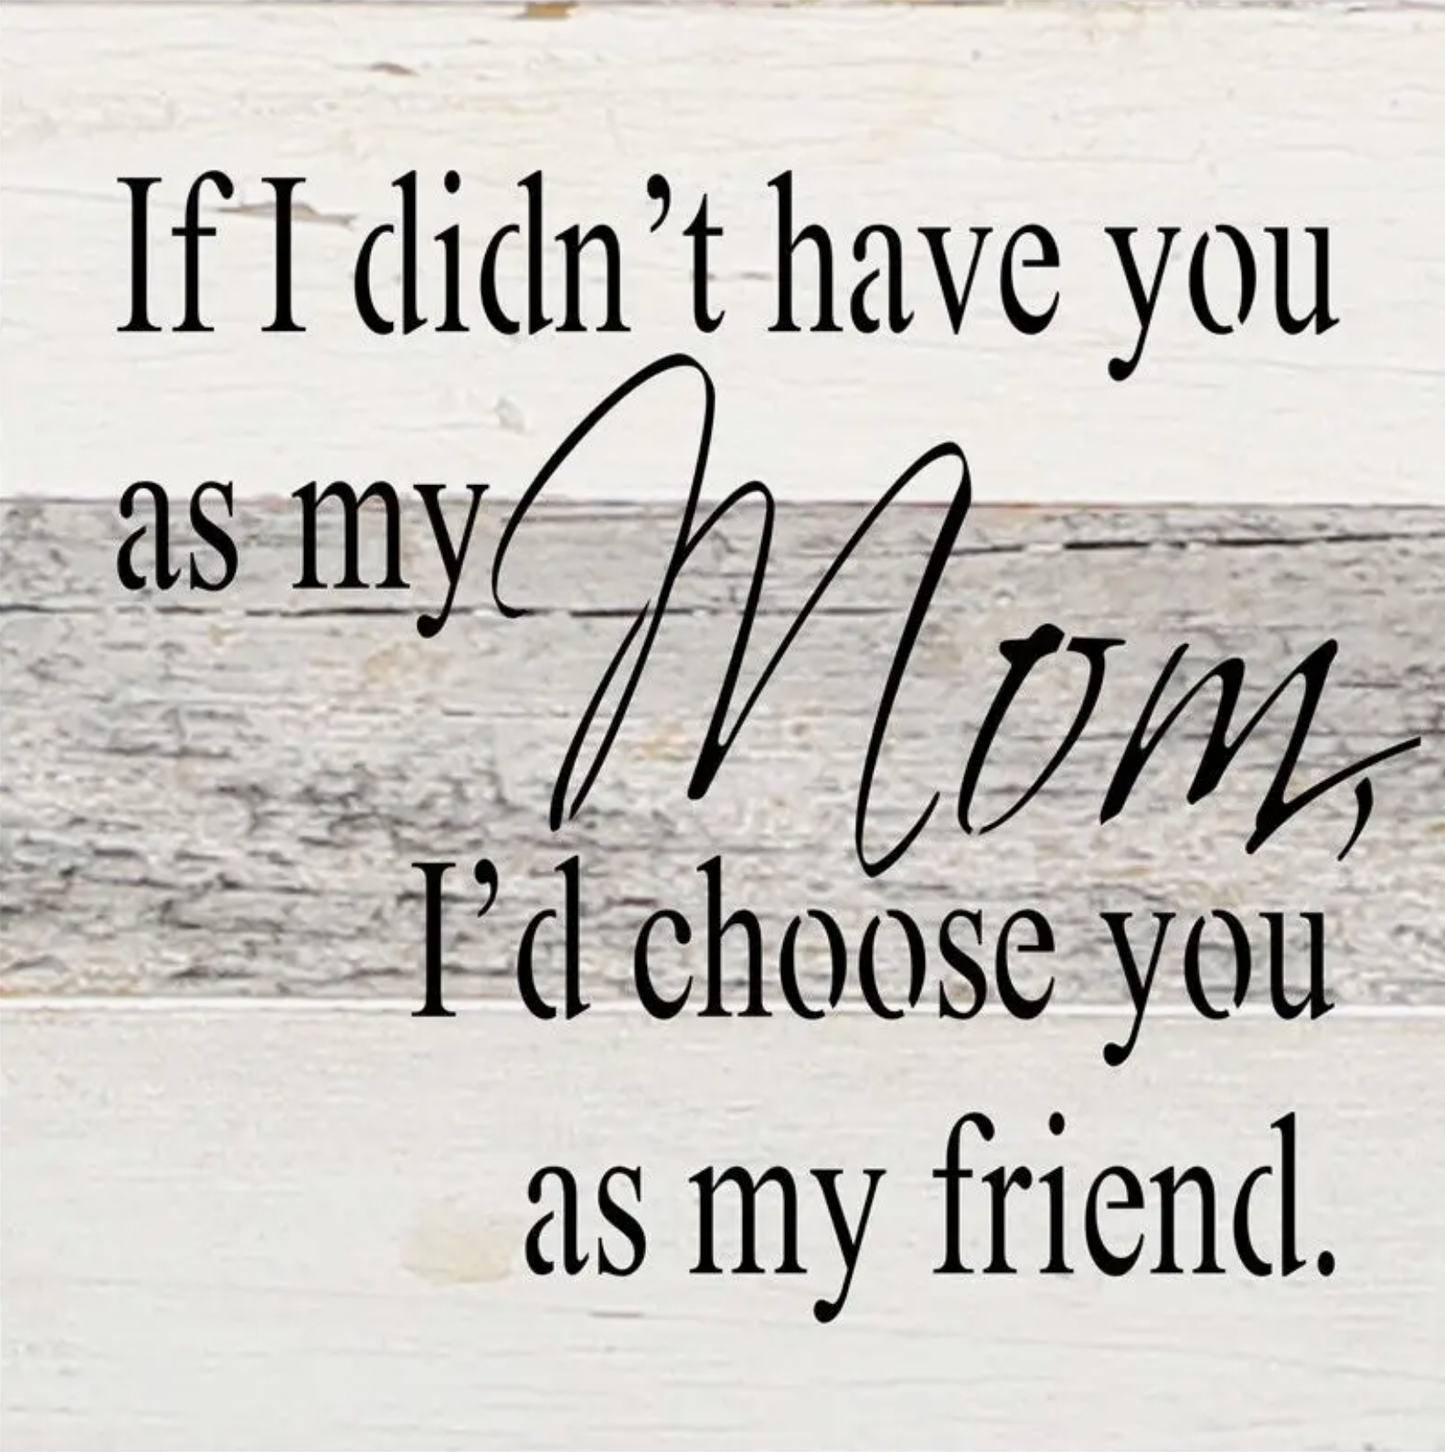 IF I DIDN'T HAVE YOU AS MY MOM I'D CHOOSE YOU AS MY FRIEND